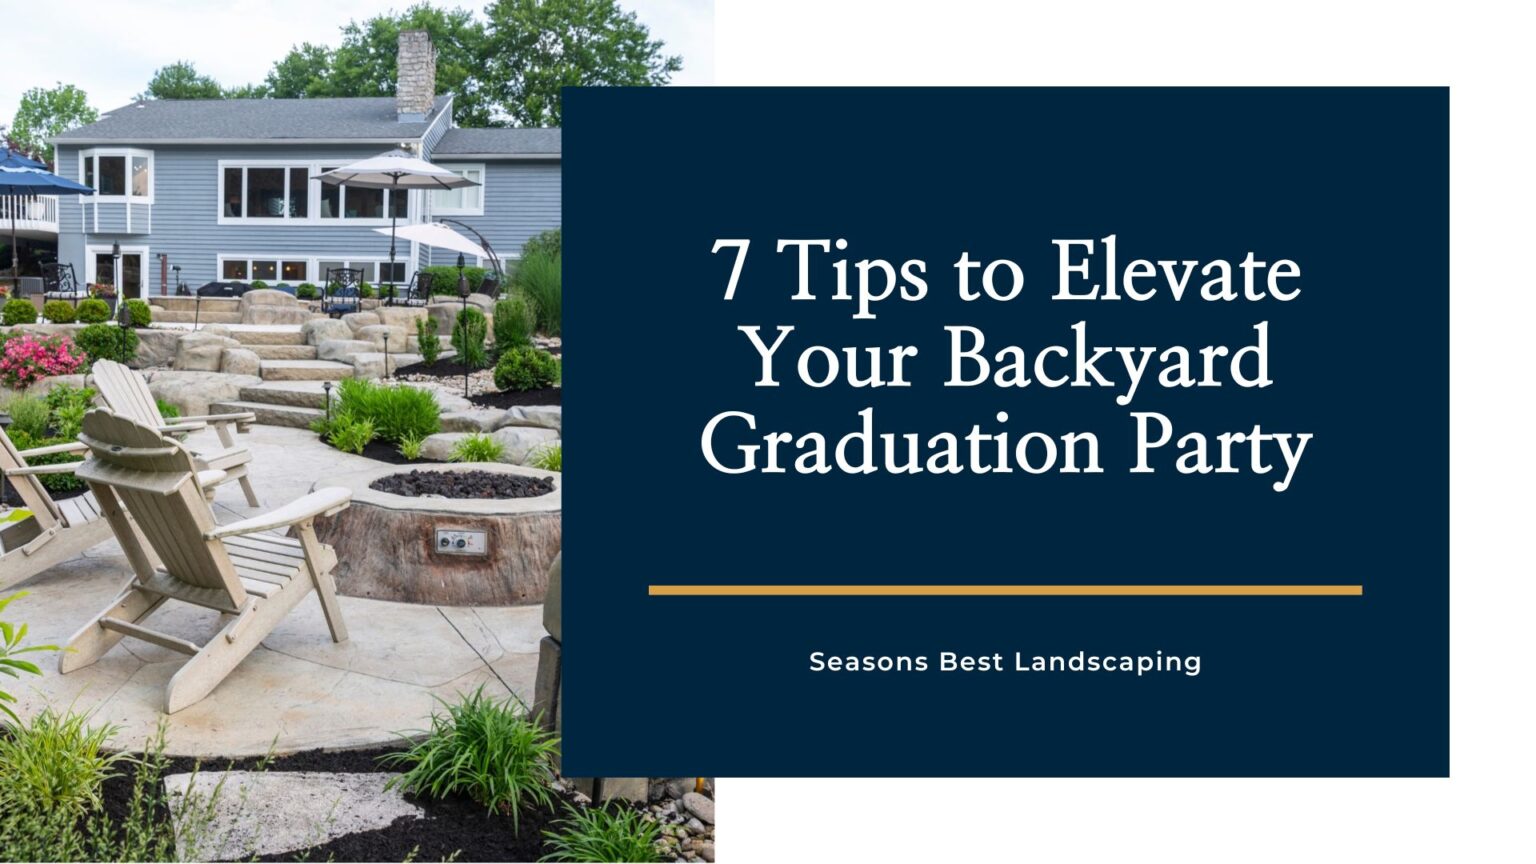 Enhance Your Backyard Graduation - Seasons Best Landscaping